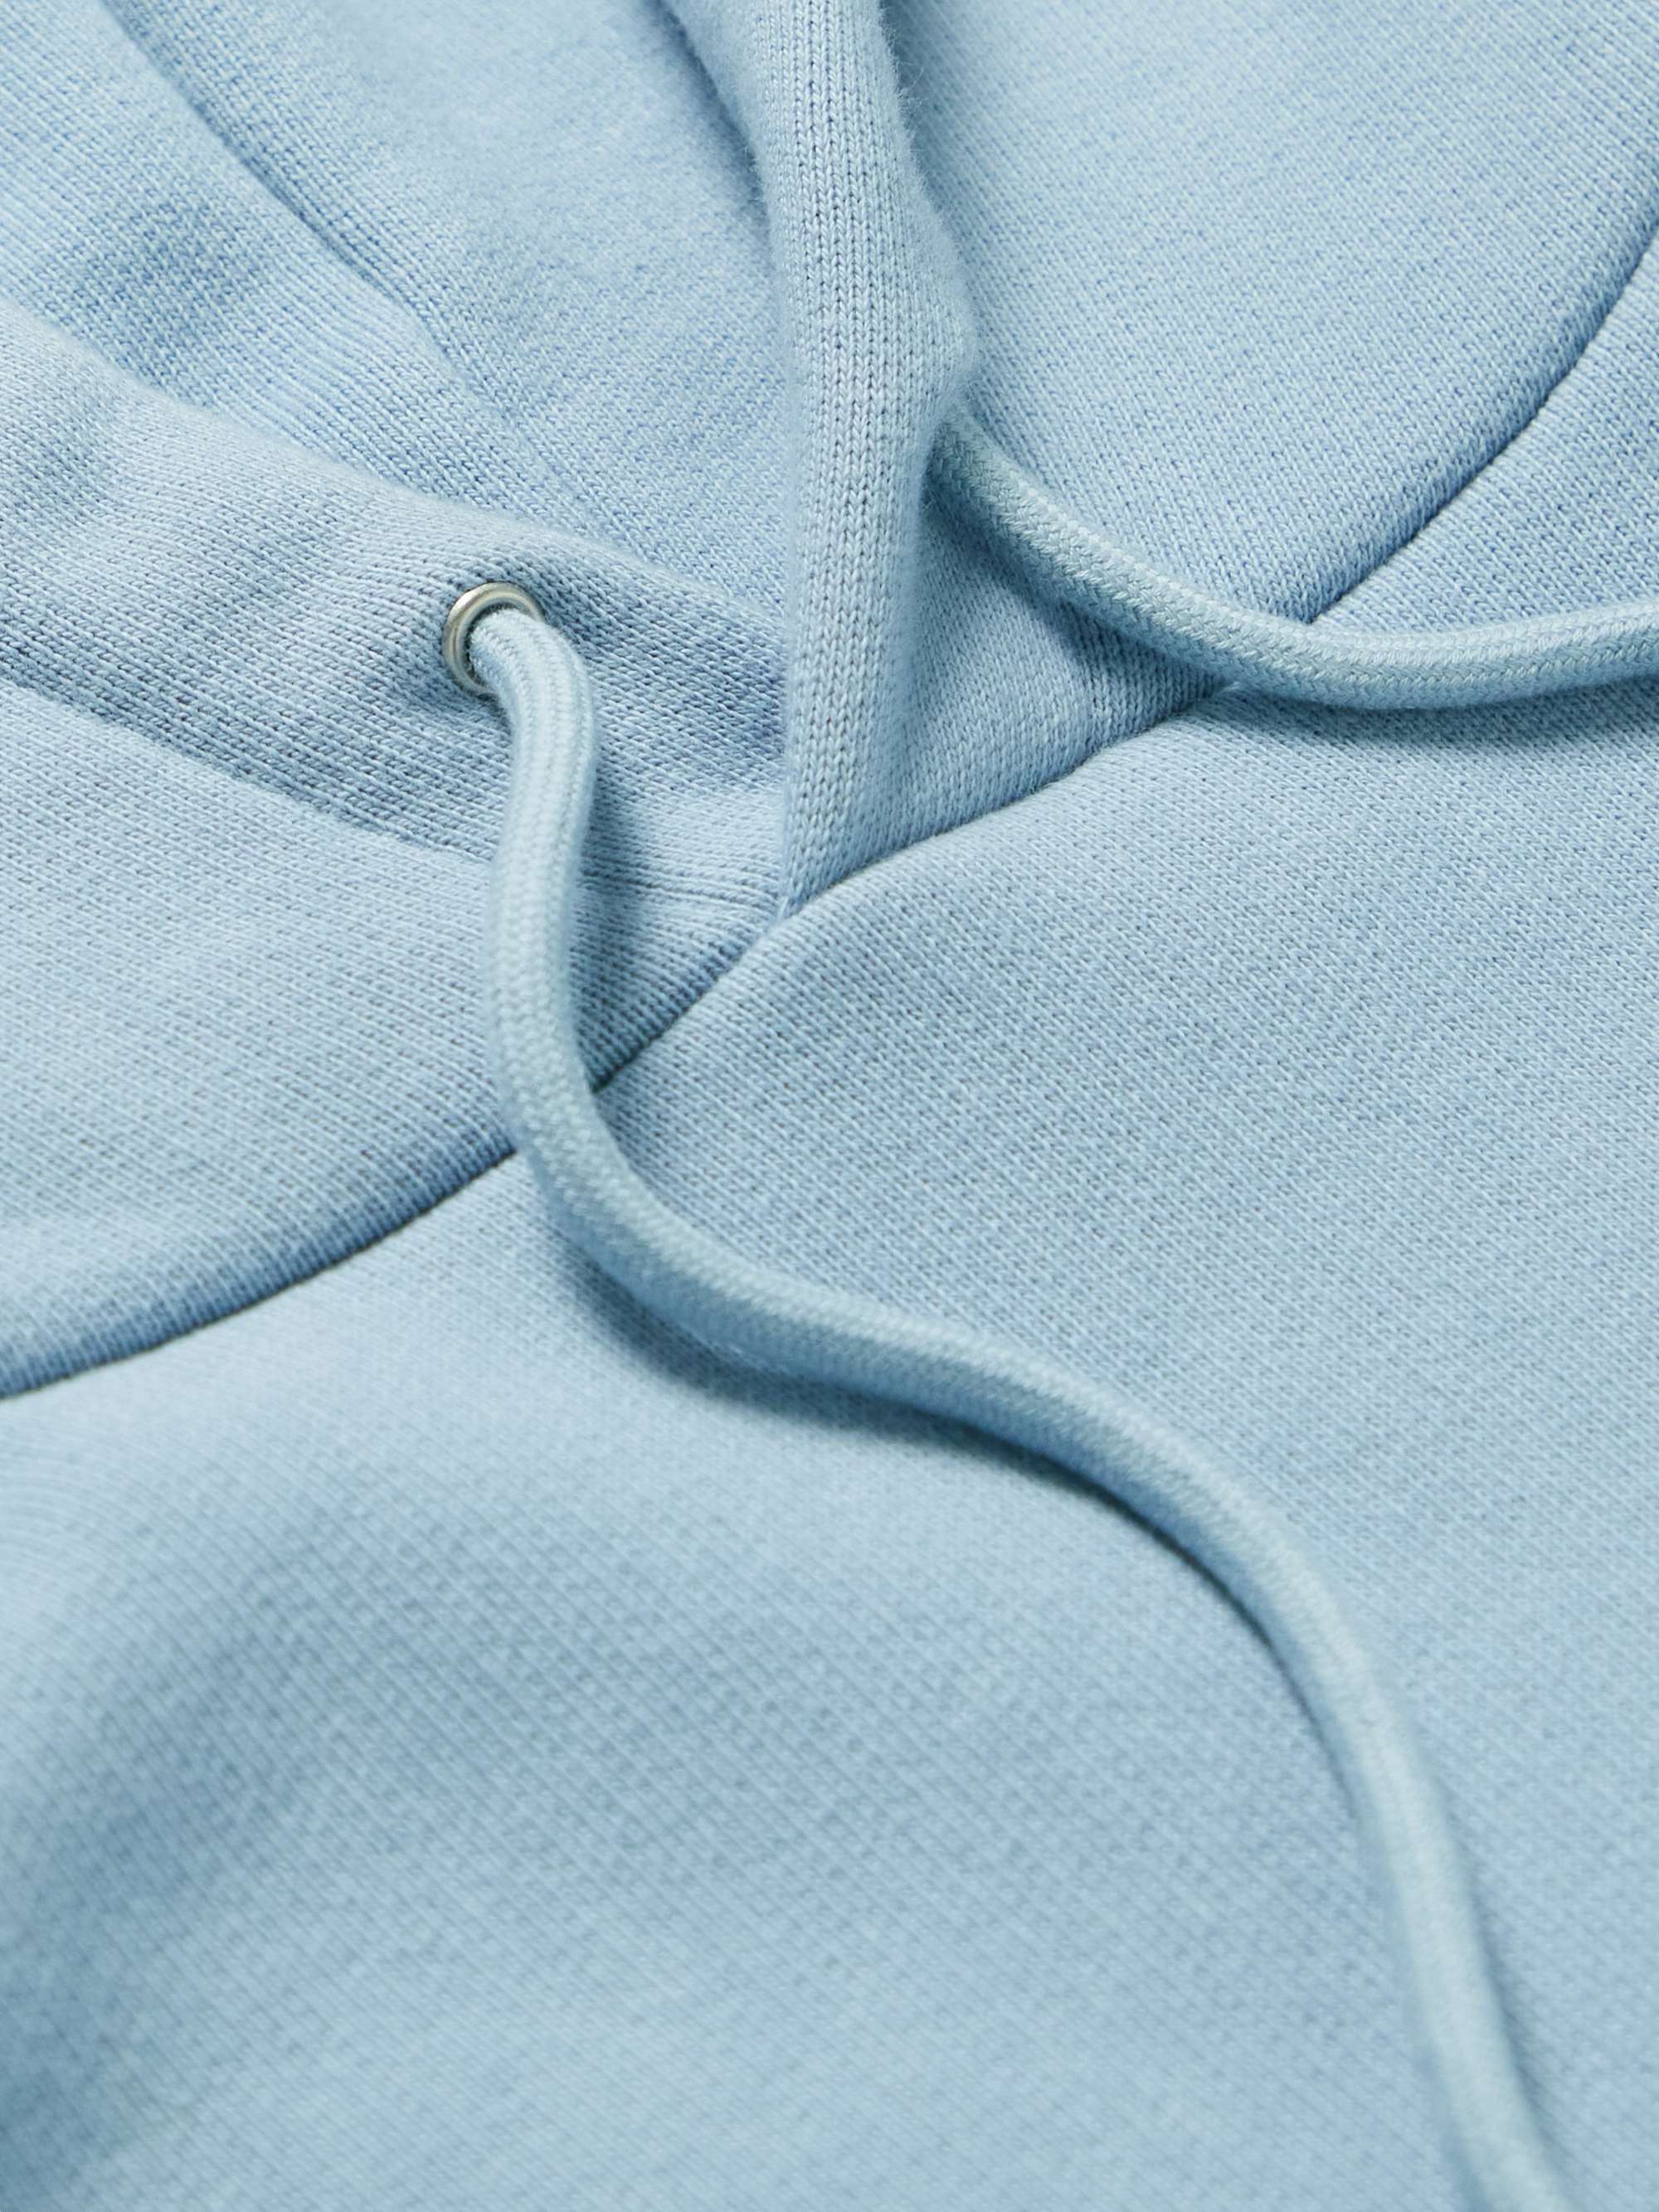 CELINE HOMME Logo-Print Cotton-Jersey Hoodie